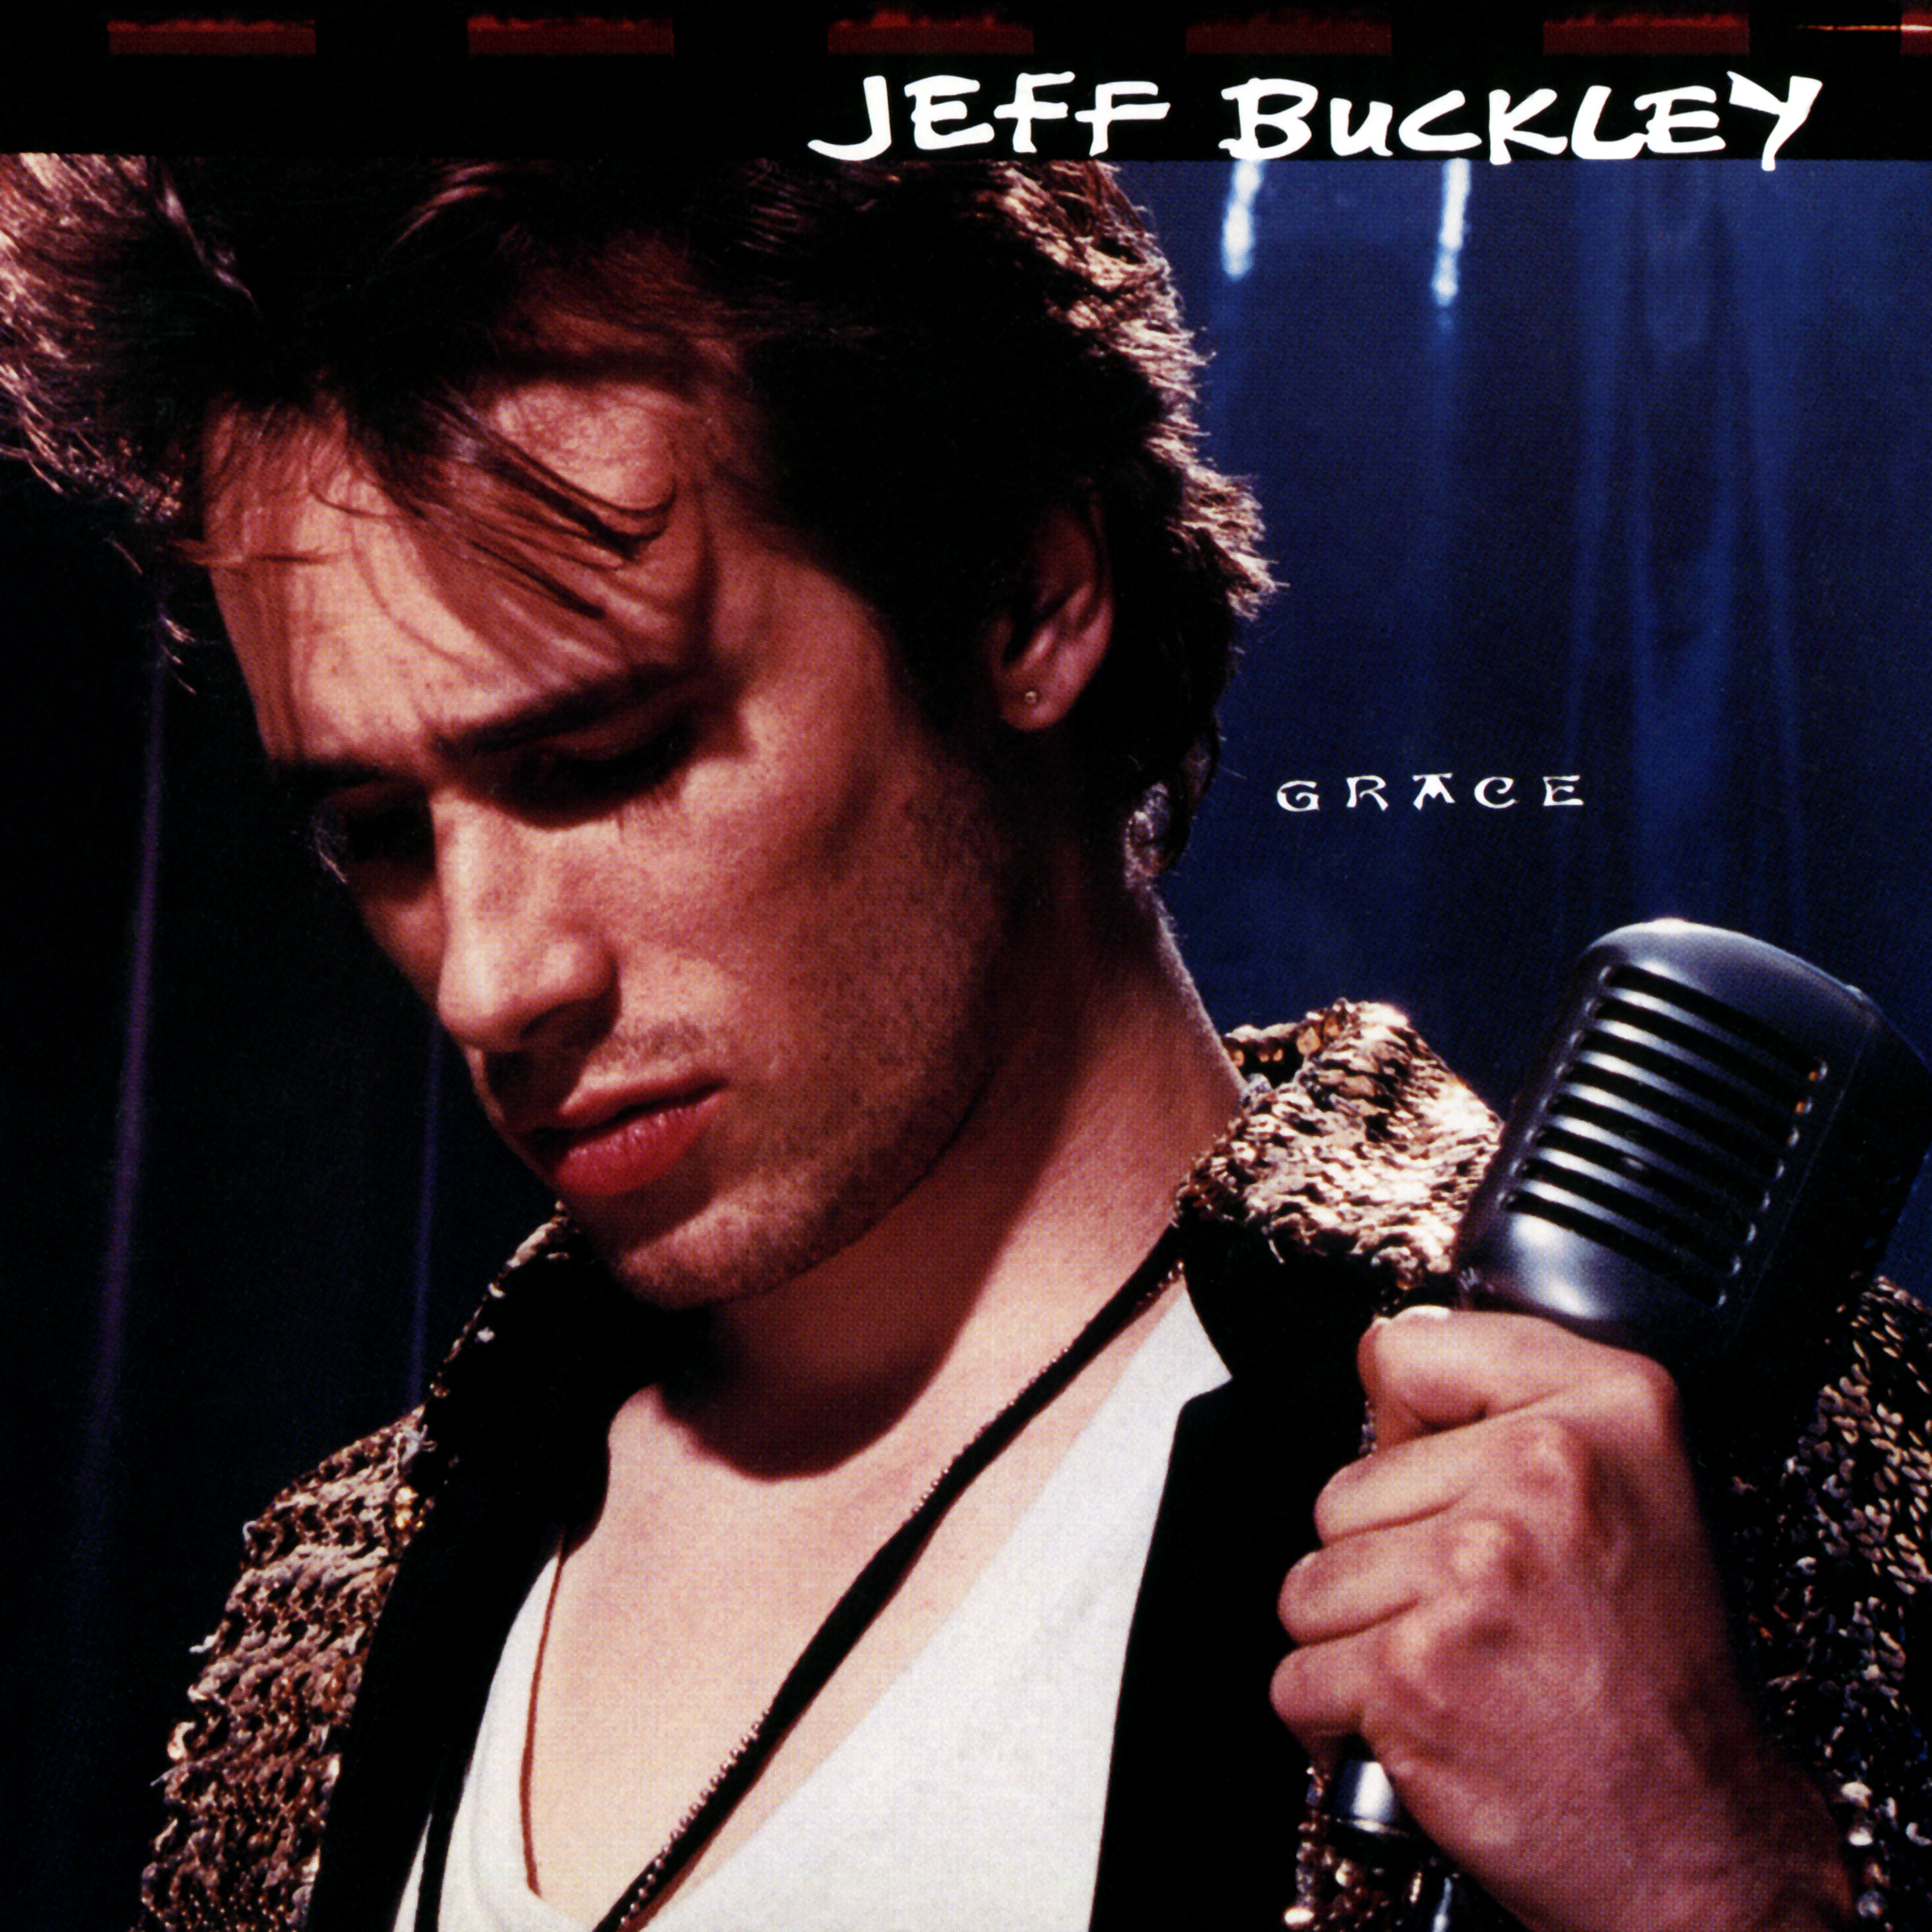 Jeff Buckley "Grace" Gold LP